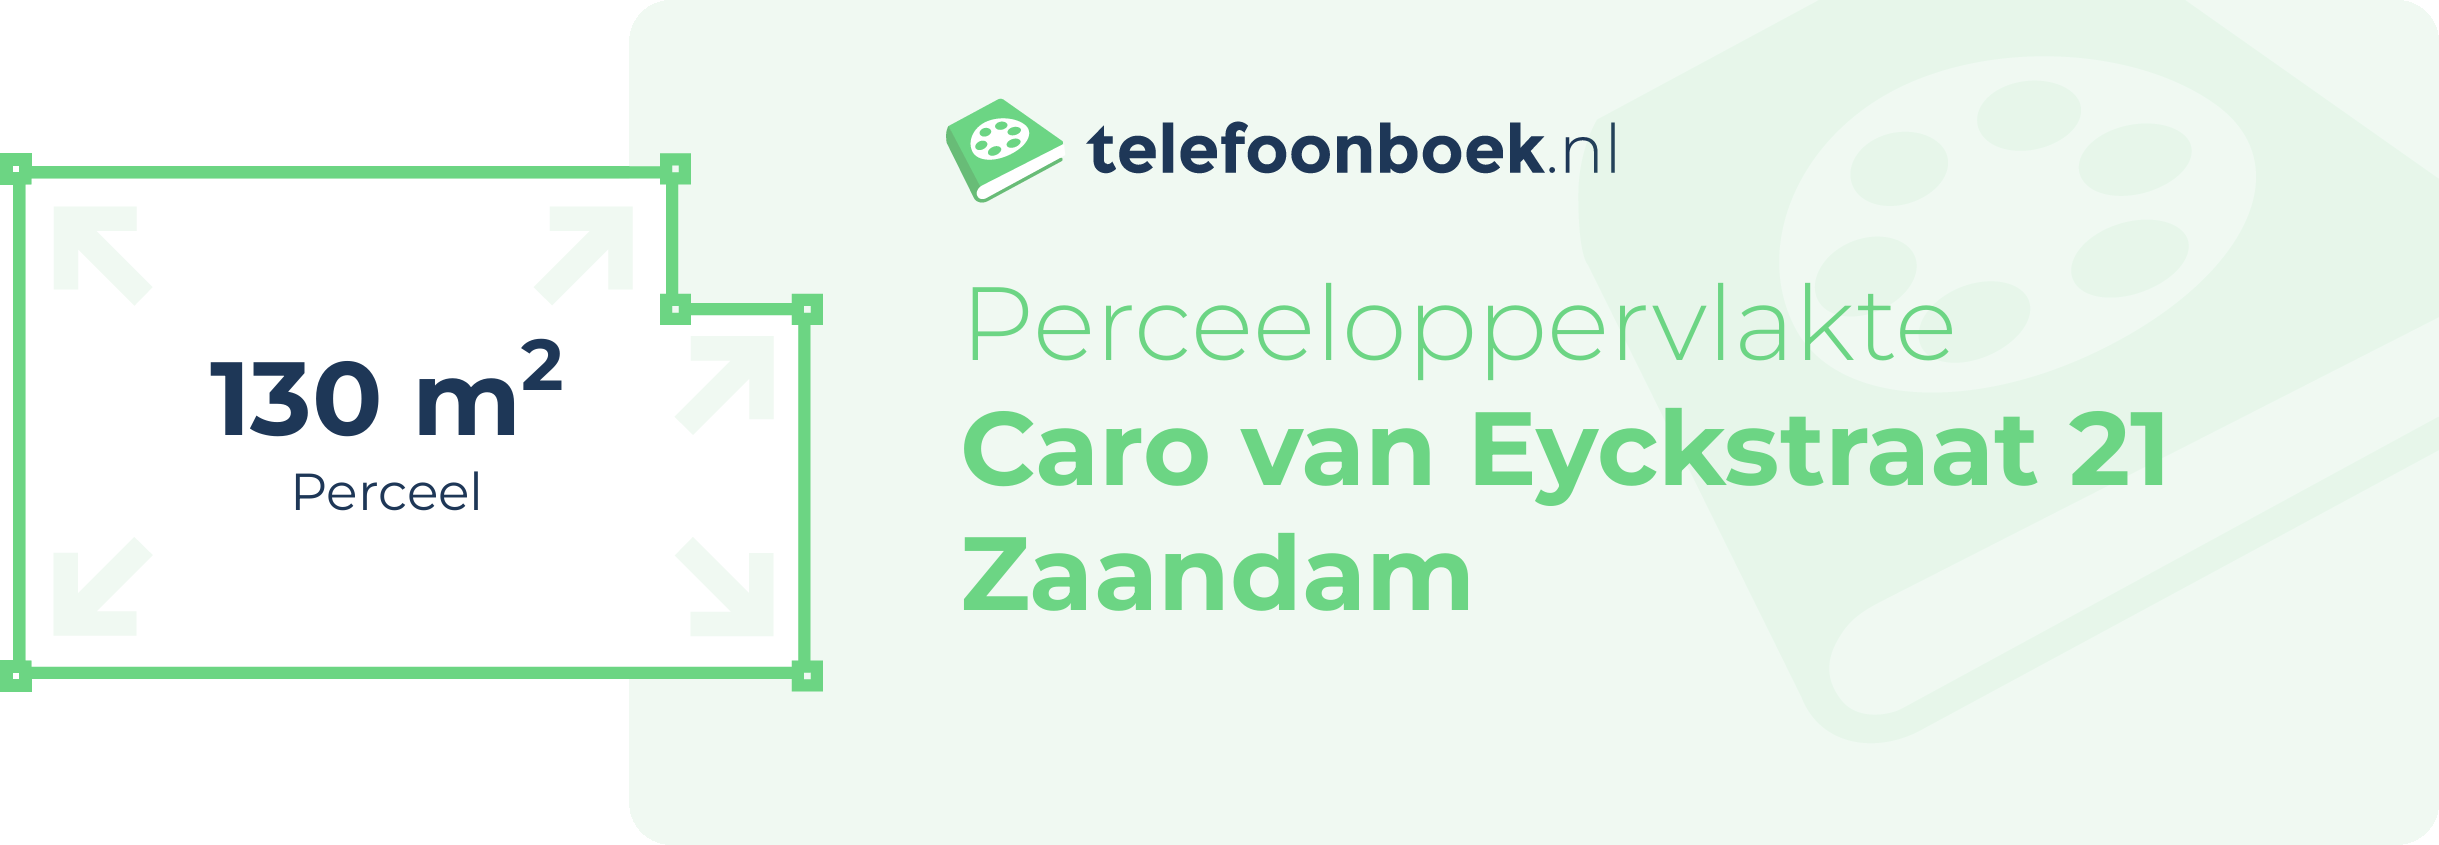 Perceeloppervlakte Caro Van Eyckstraat 21 Zaandam